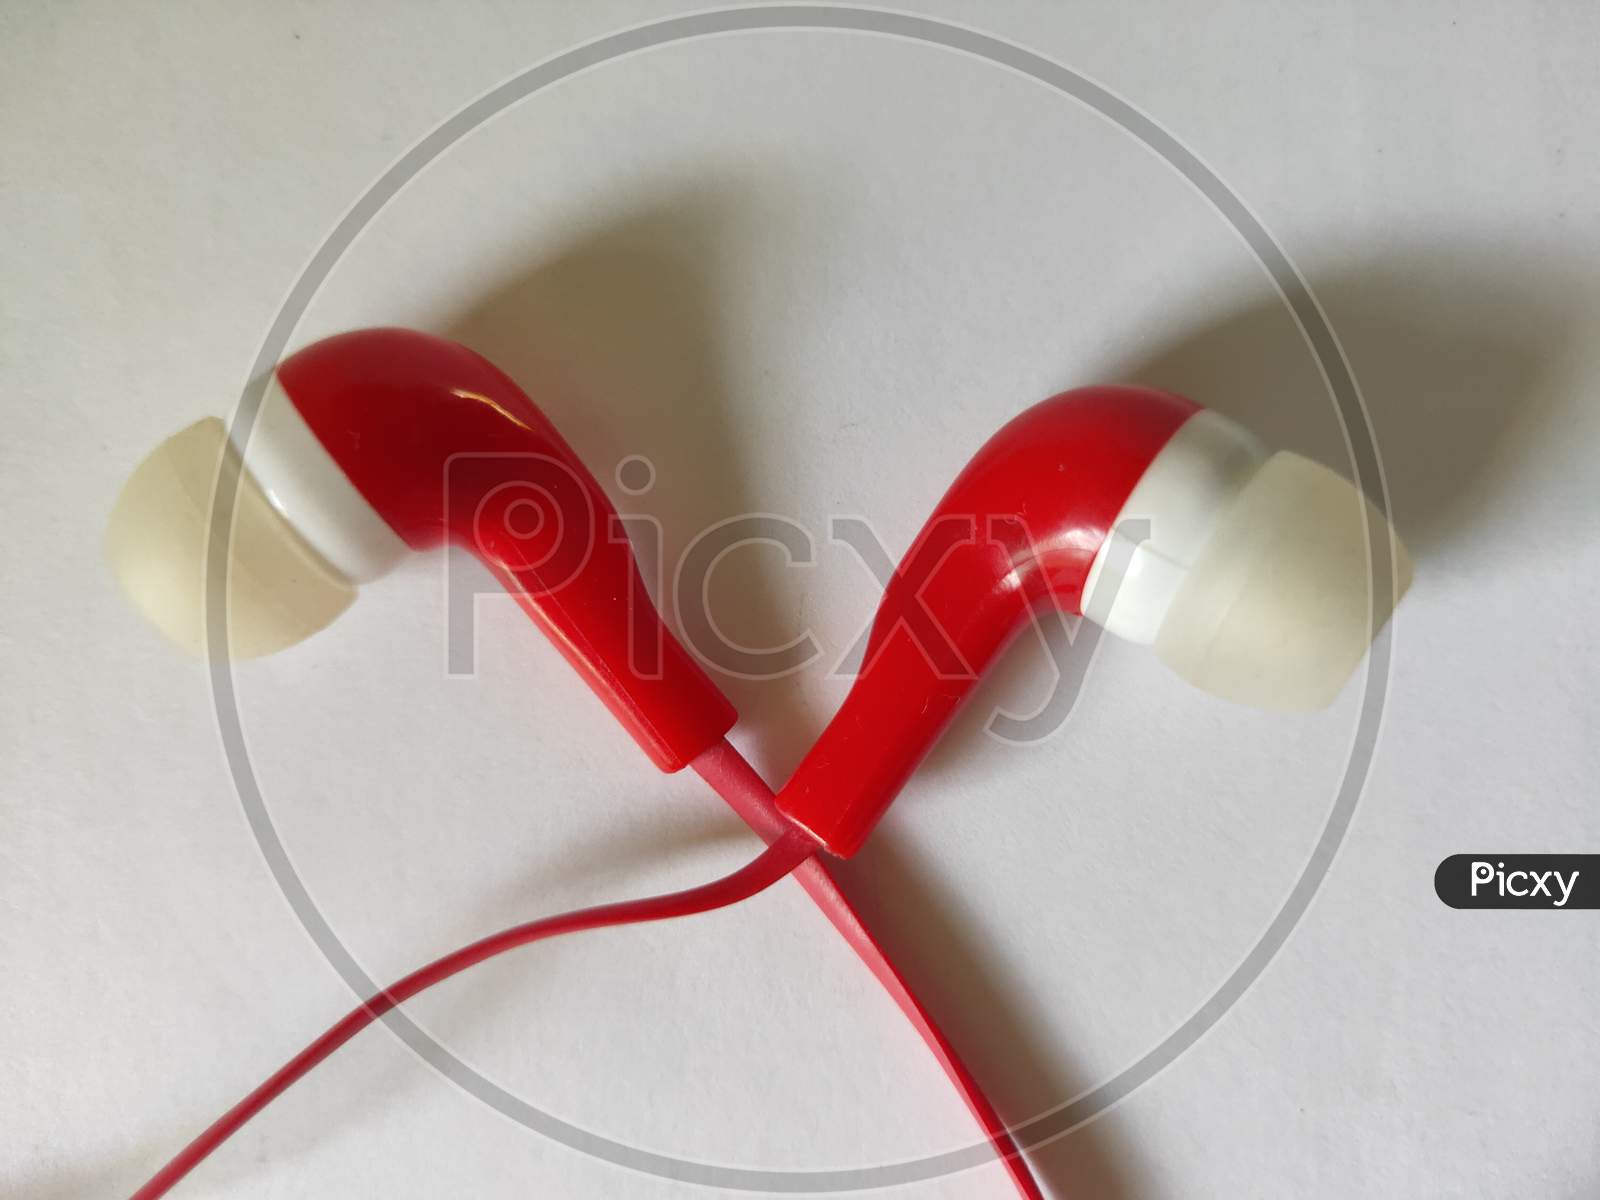 Earphones on white background. Red earphones on plain background. Headphones and heart shaped object. Listen to heart through headphones.